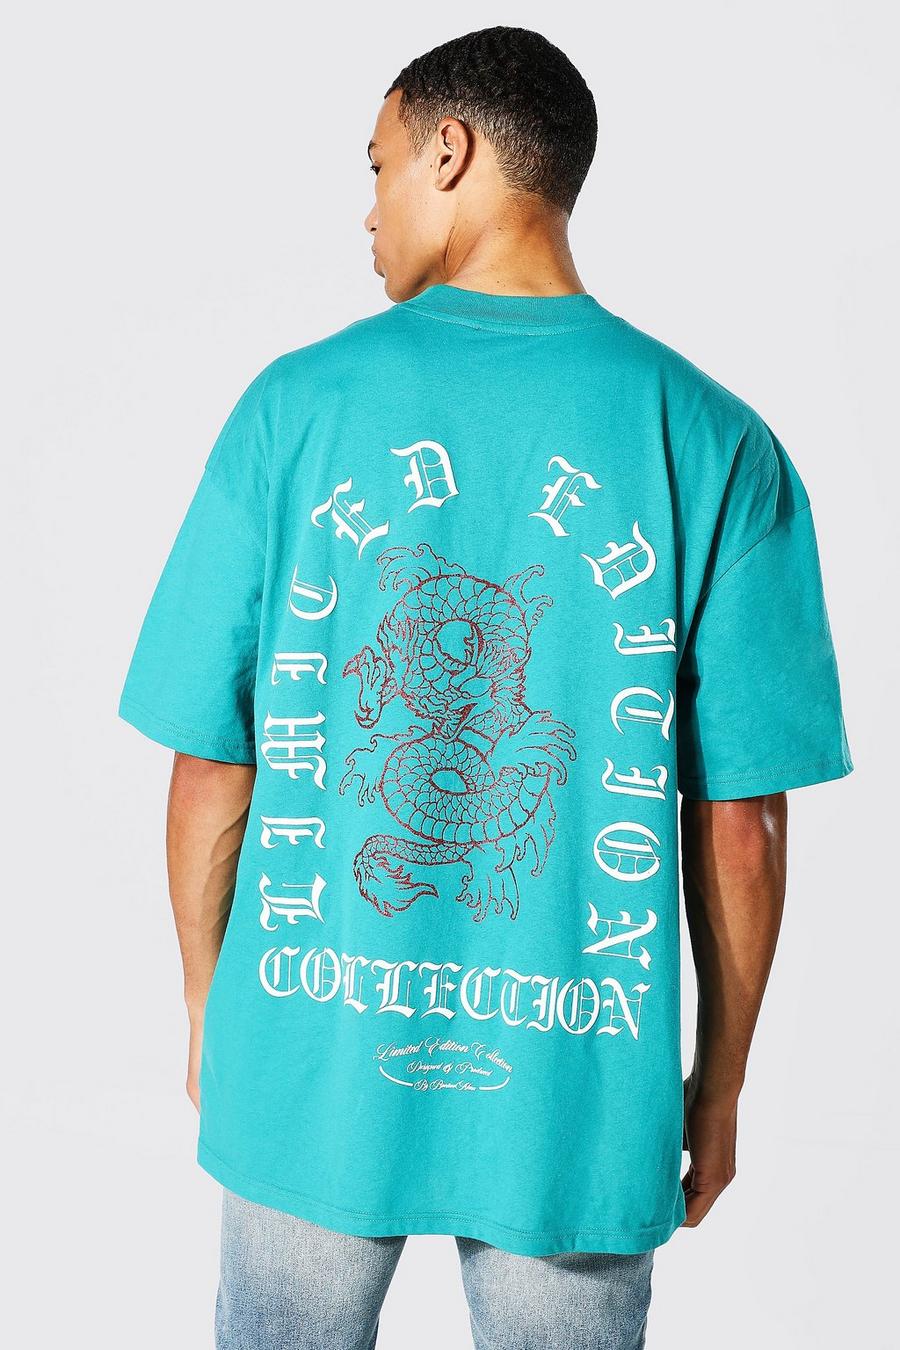 Teal green Tall Limited Back Print T-shirt